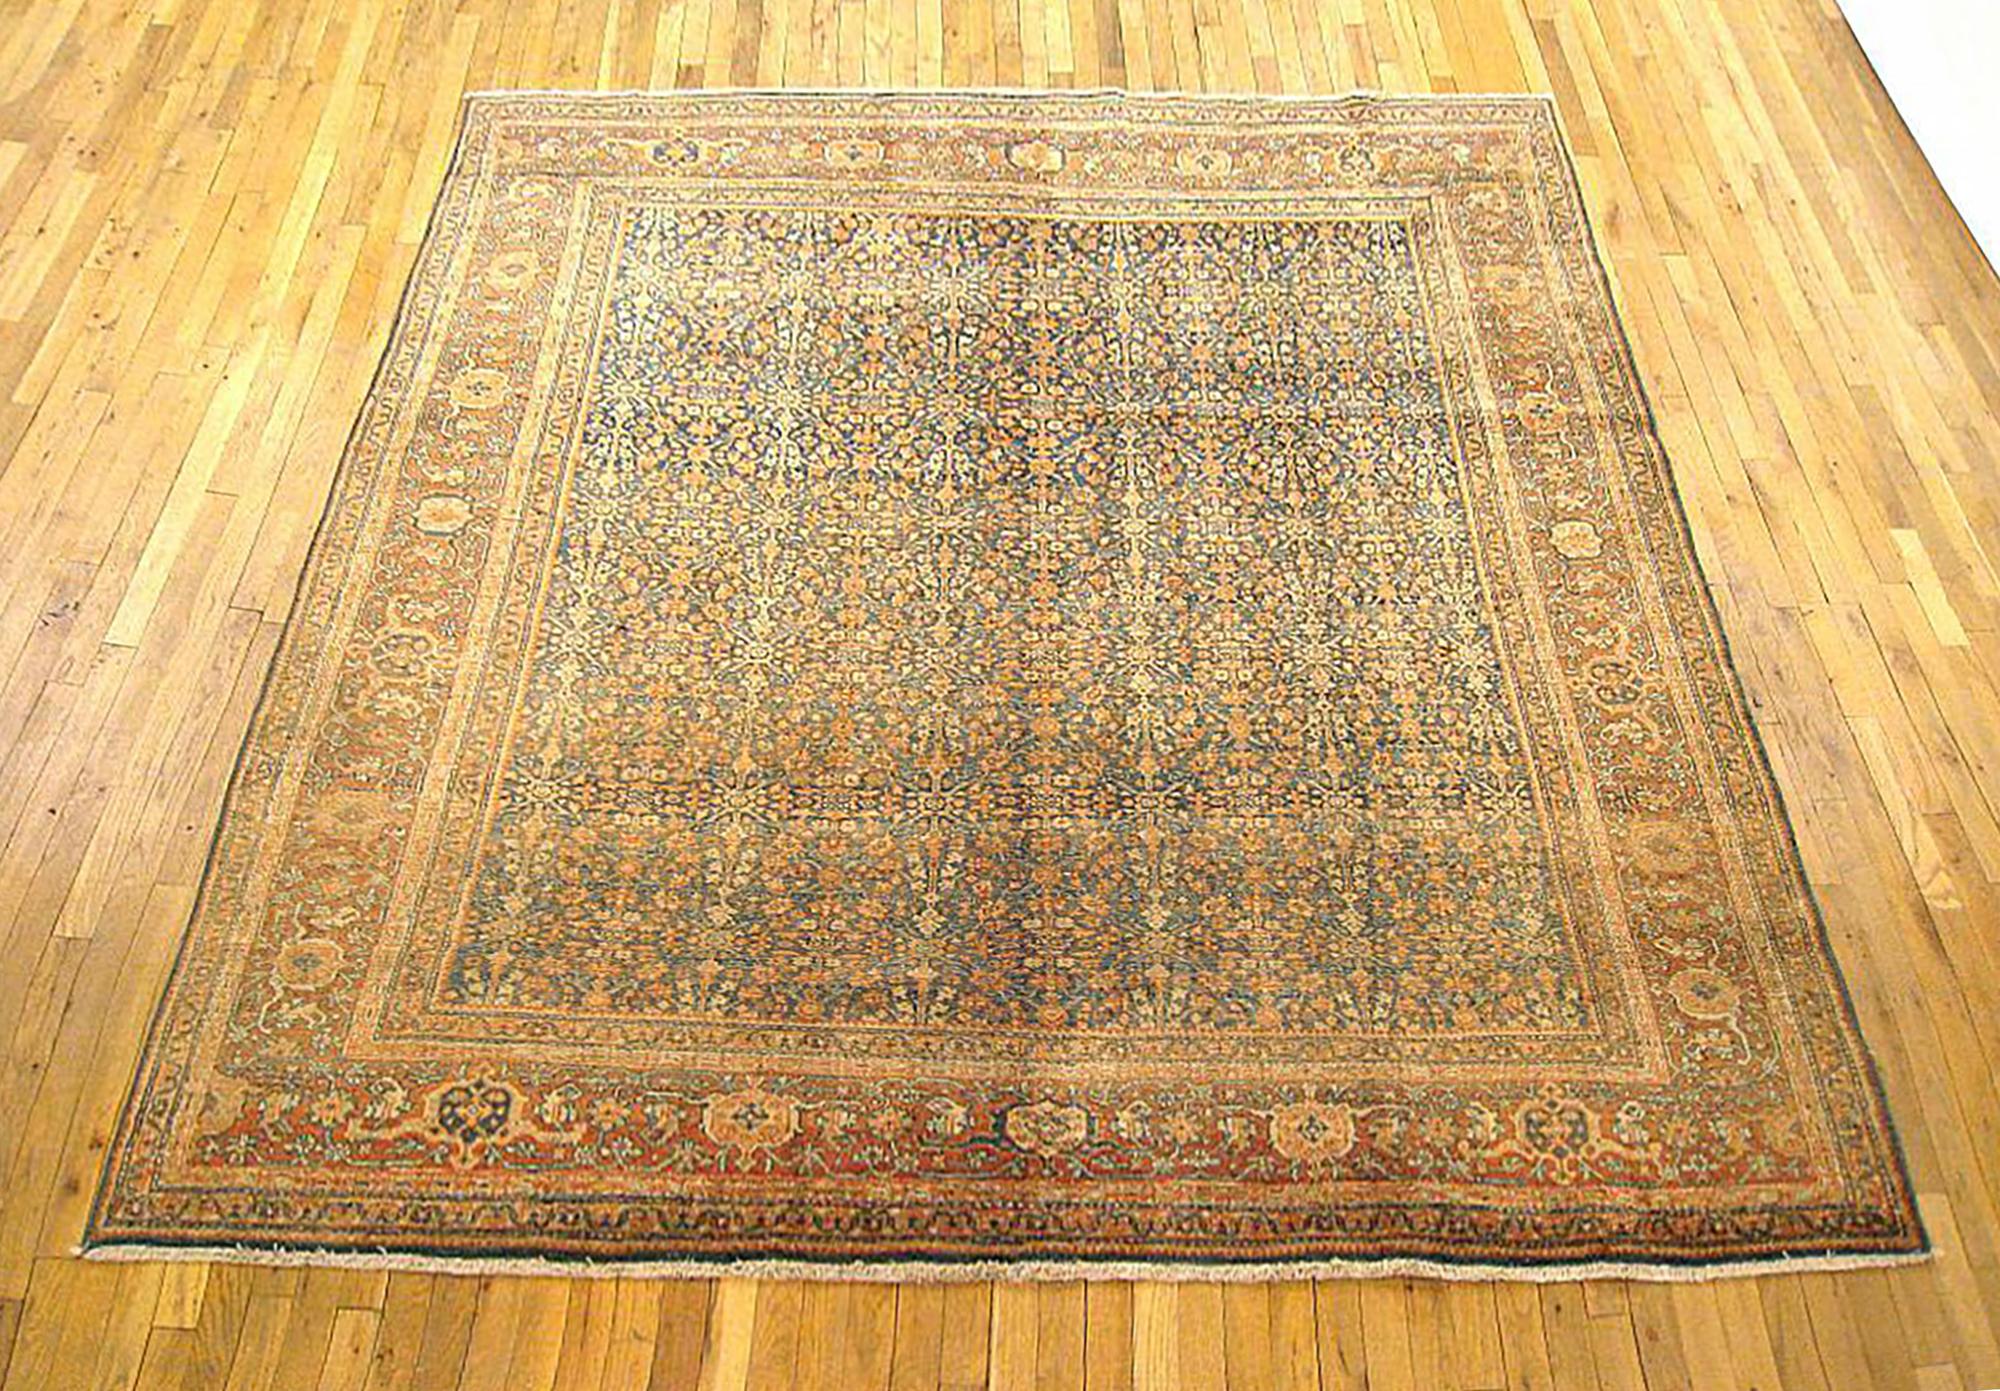 Antiker persischer Täbris  Orientteppich, um 1920, Zimmergröße

Ein antiker persischer Orientteppich aus Täbris, um 1920. Größe: 8'3